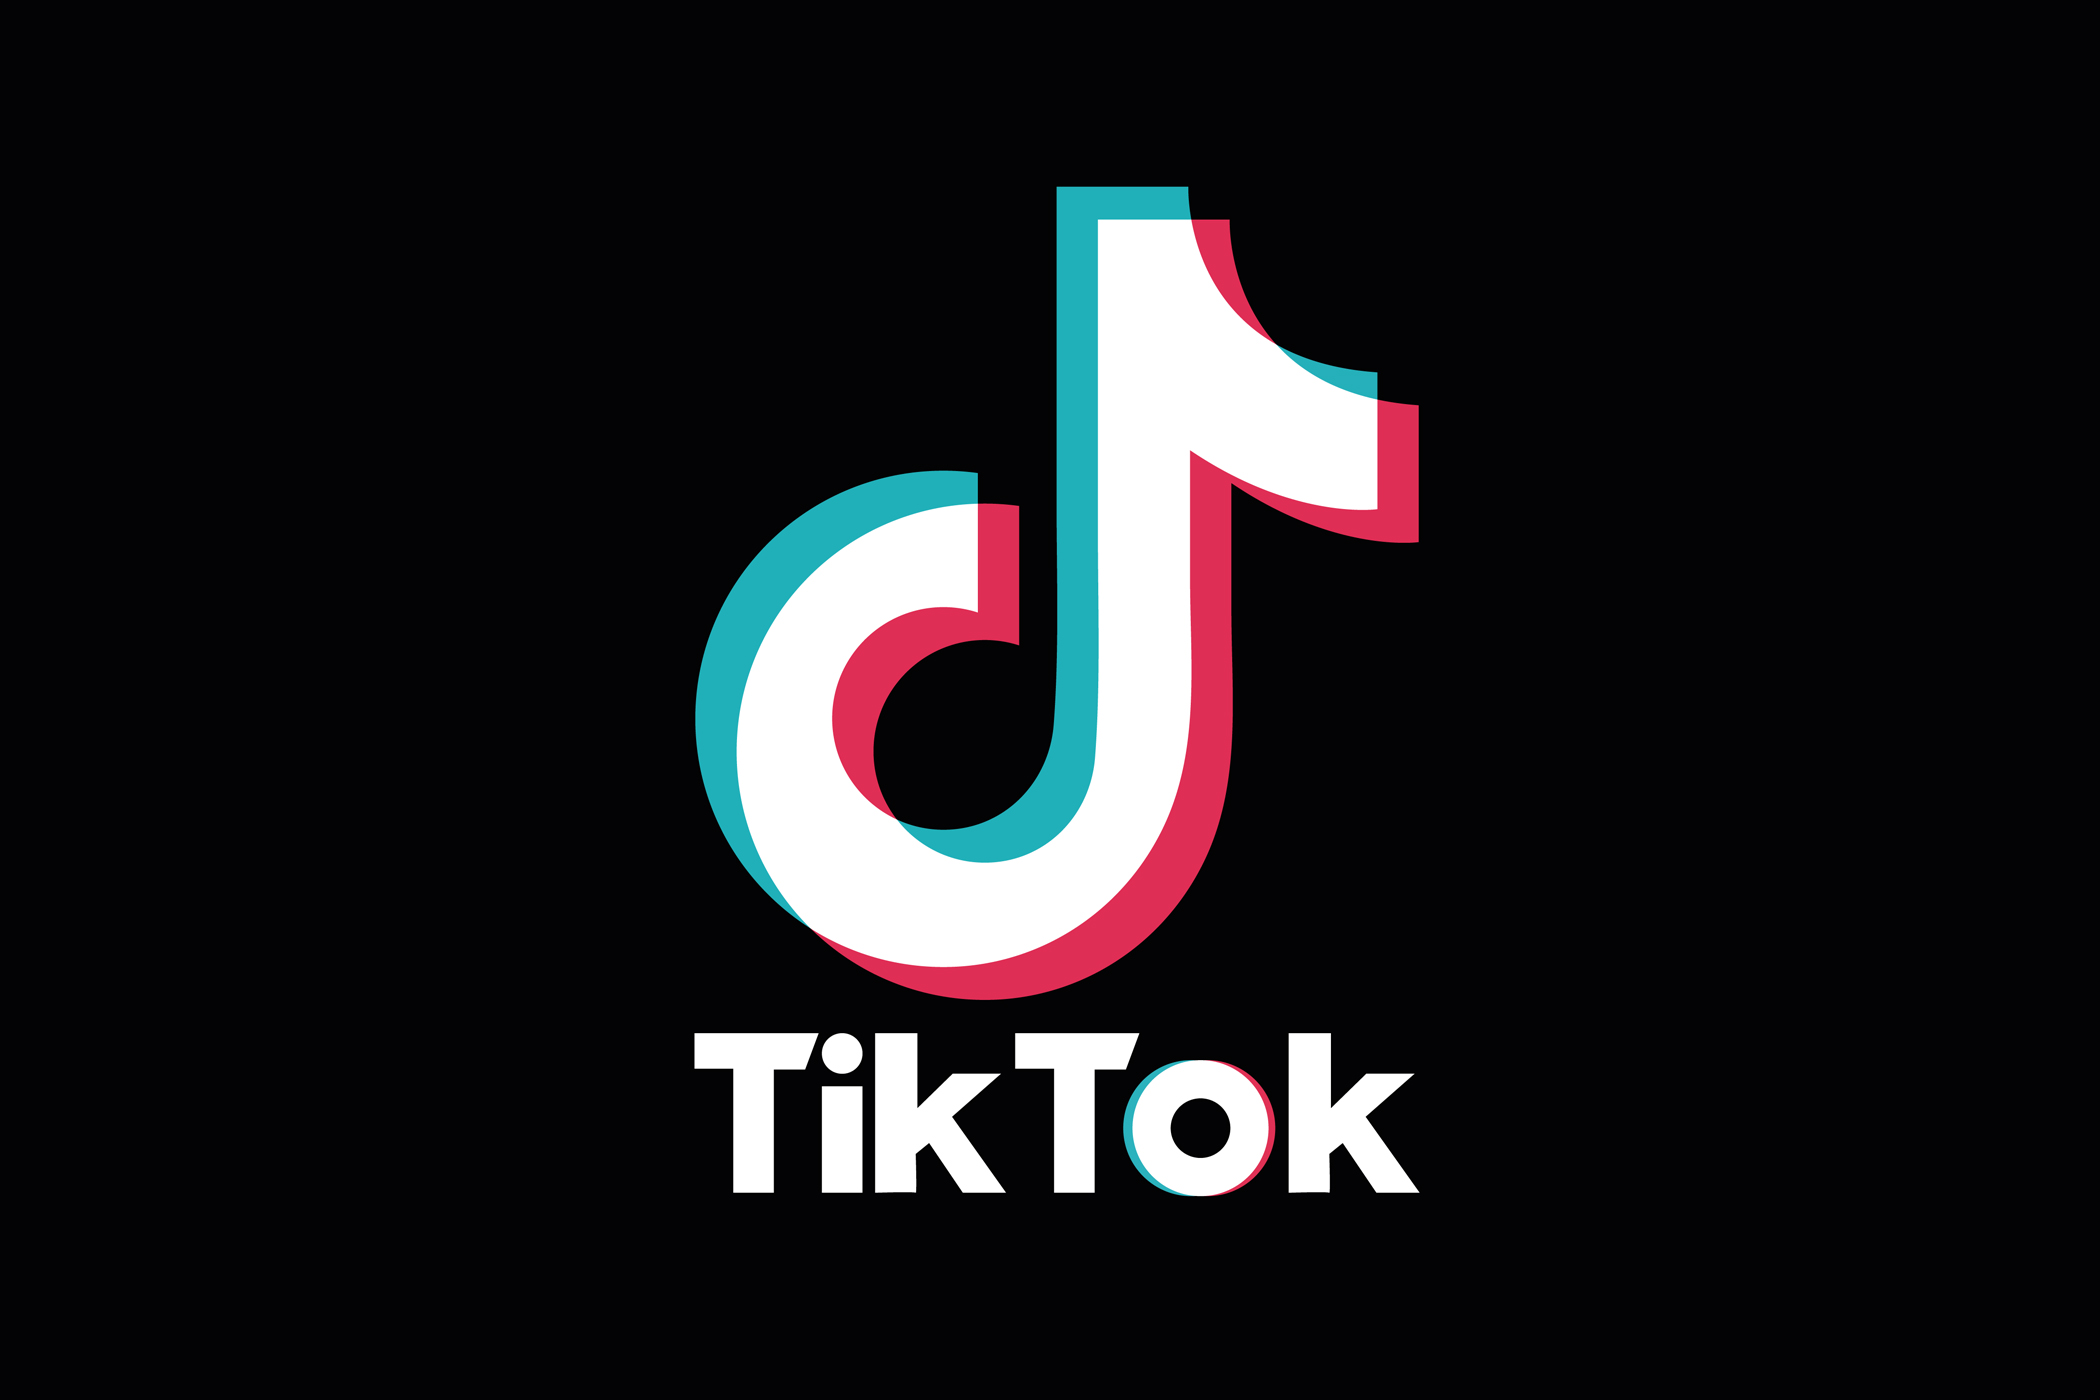 TikTok is currently 